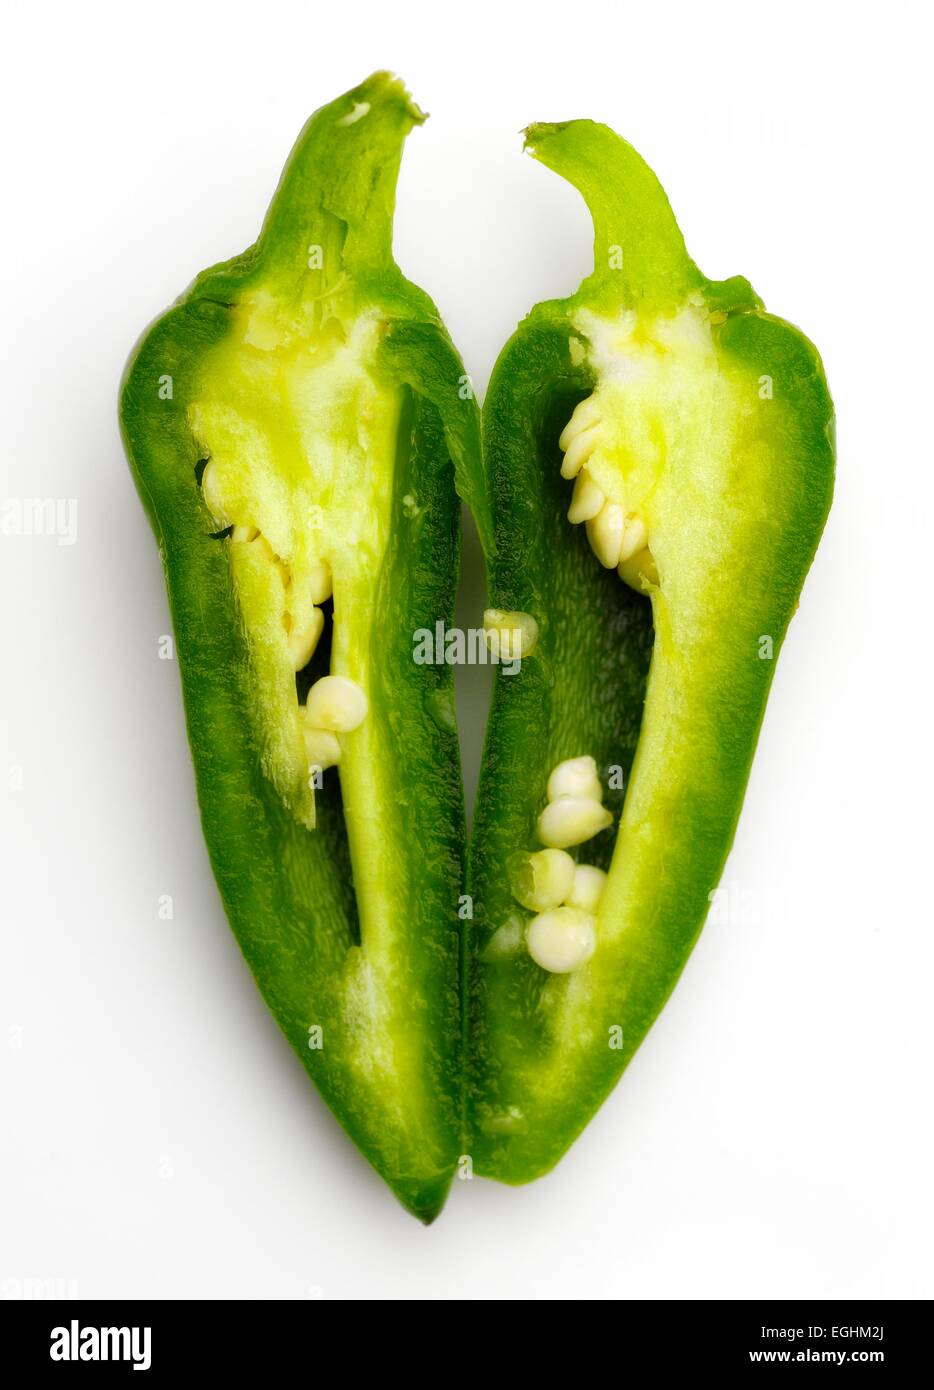 A green chili pepper cut in half Stock Photo